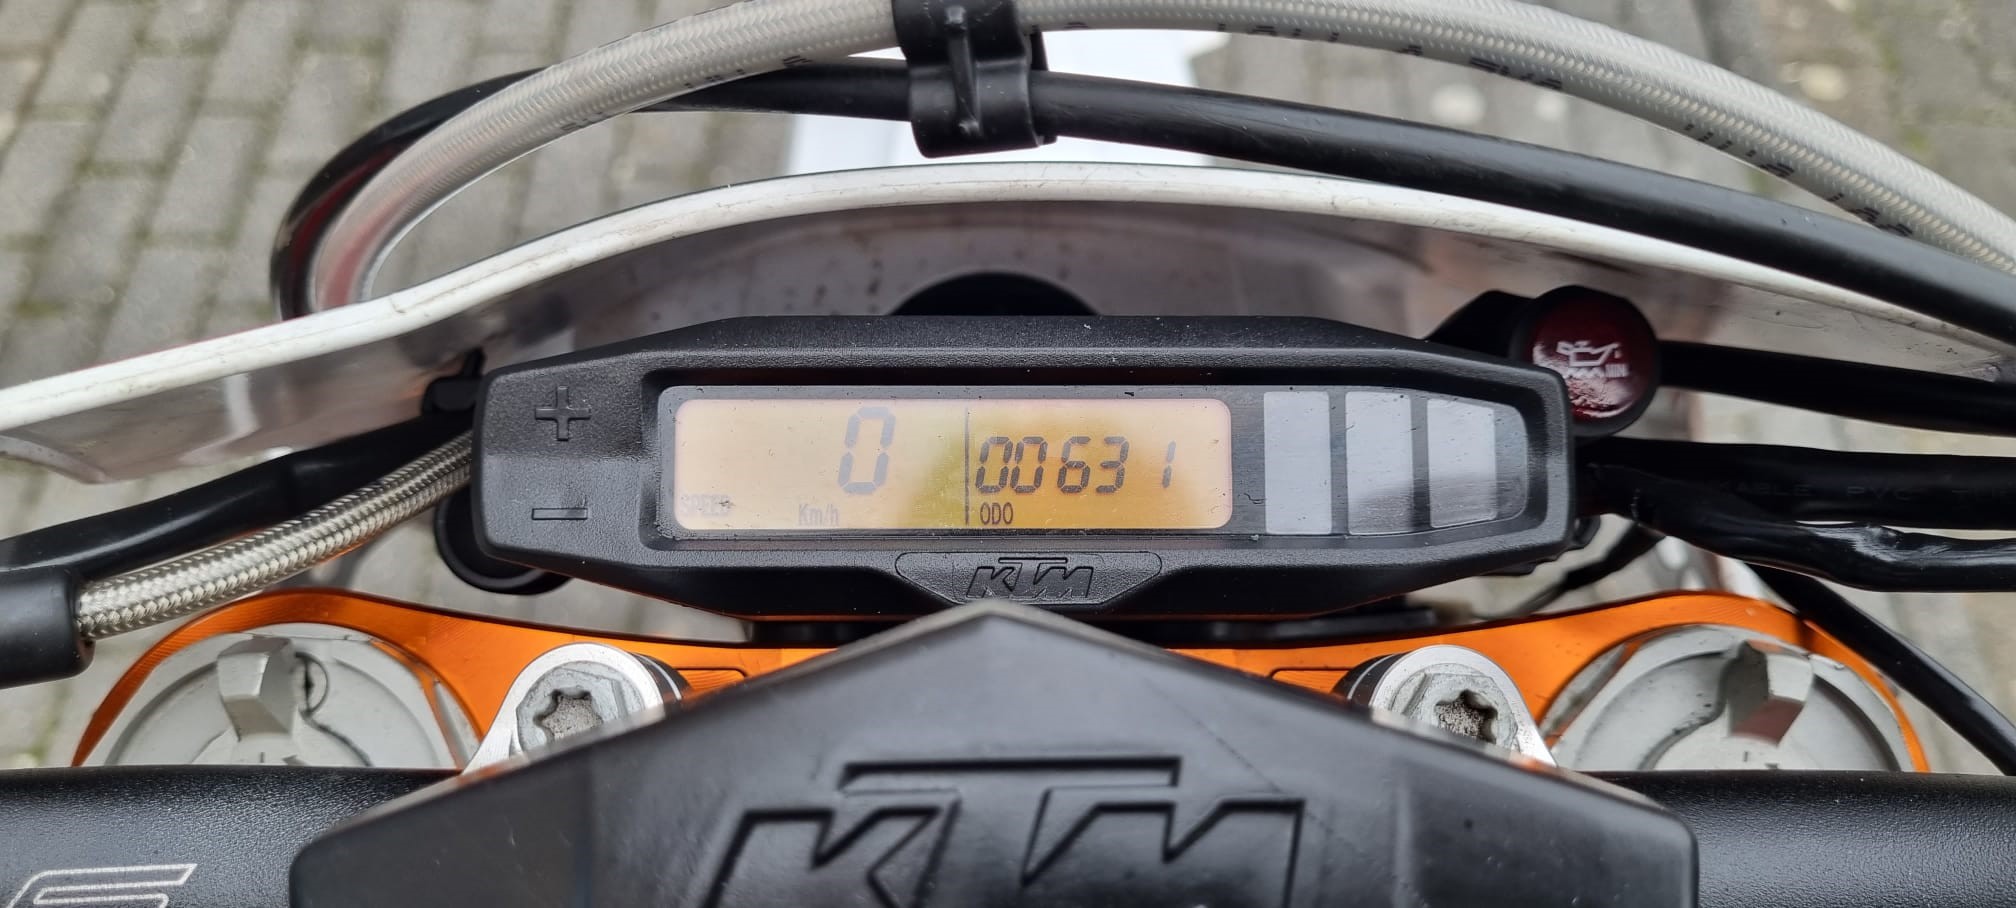 KTM - 300 EXC SIX DAYS E X C